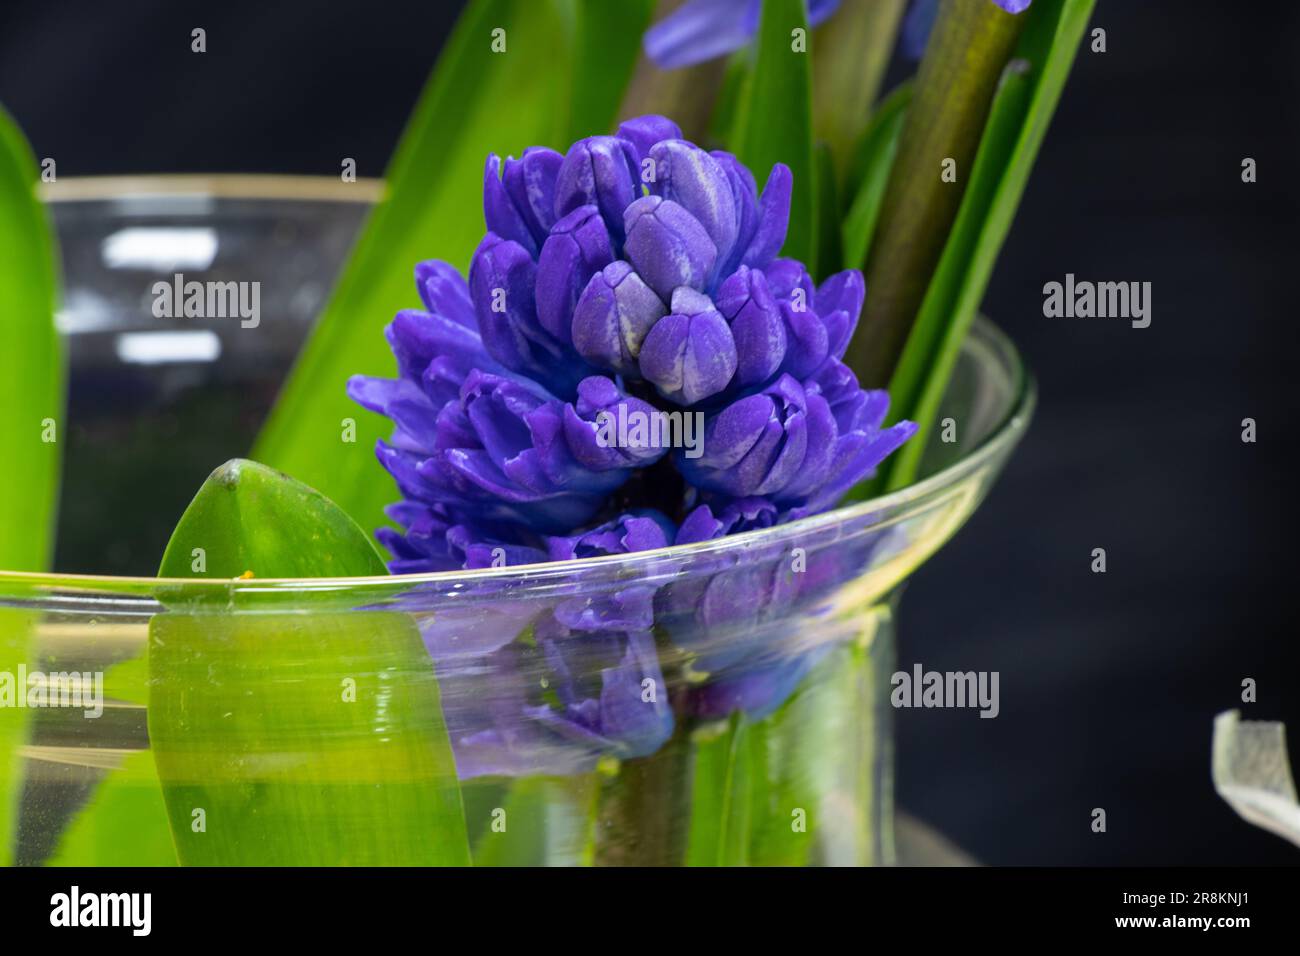 Hyacinth/The Blue Fairy, Wiki